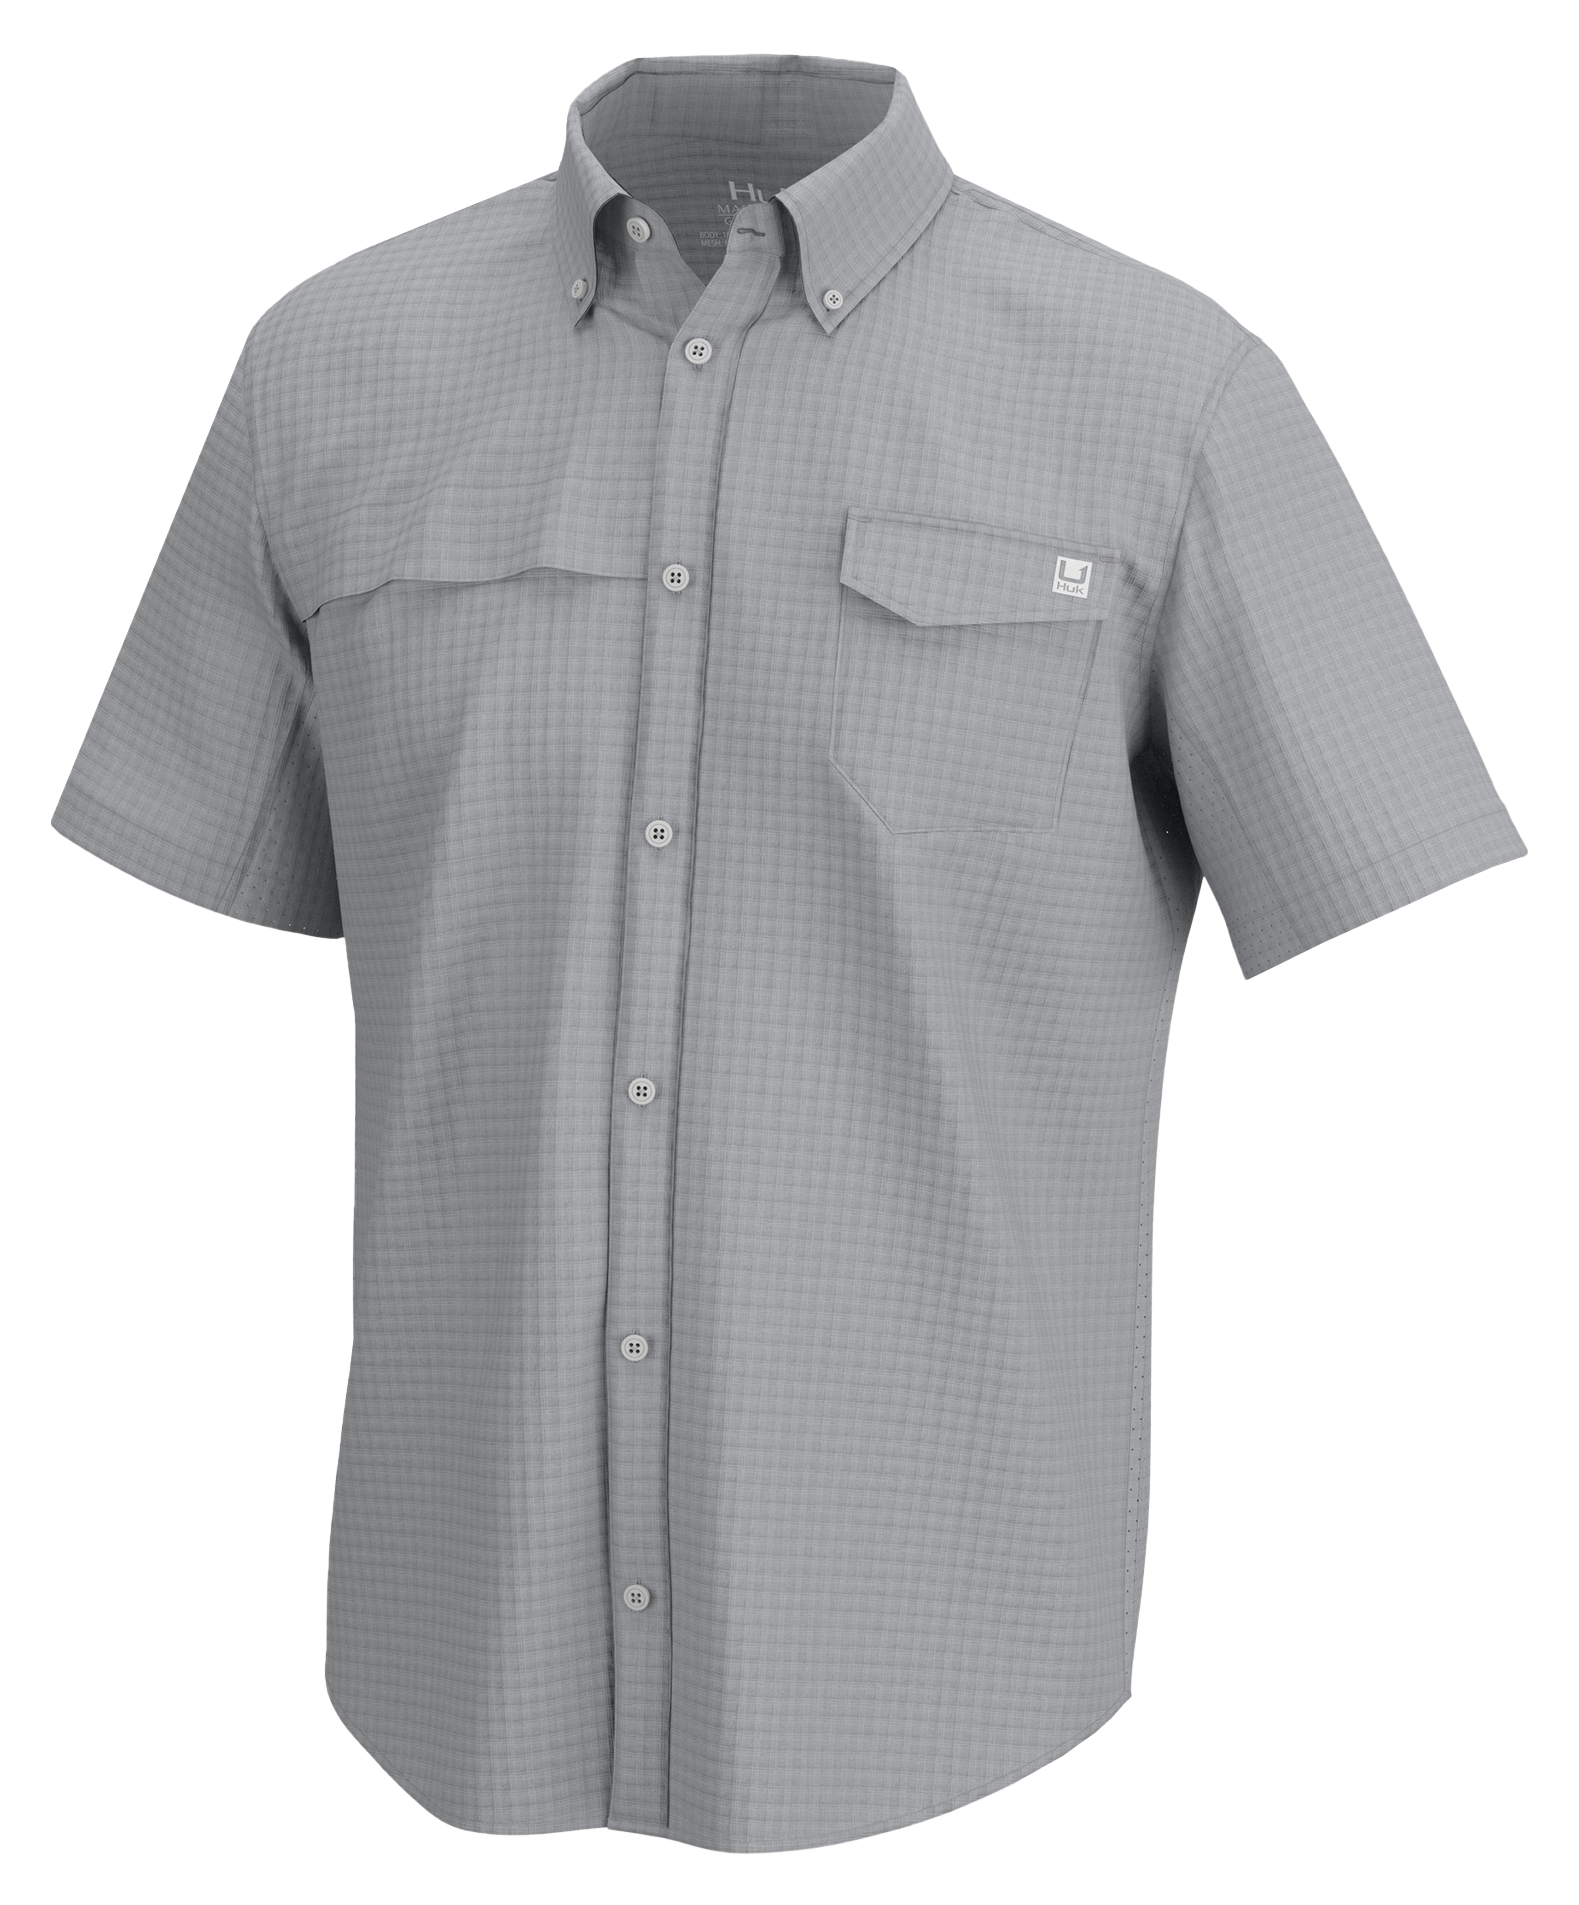 Huk Tide Point Button-Down Short-Sleeve Shirt, Medium, Harbor Mist